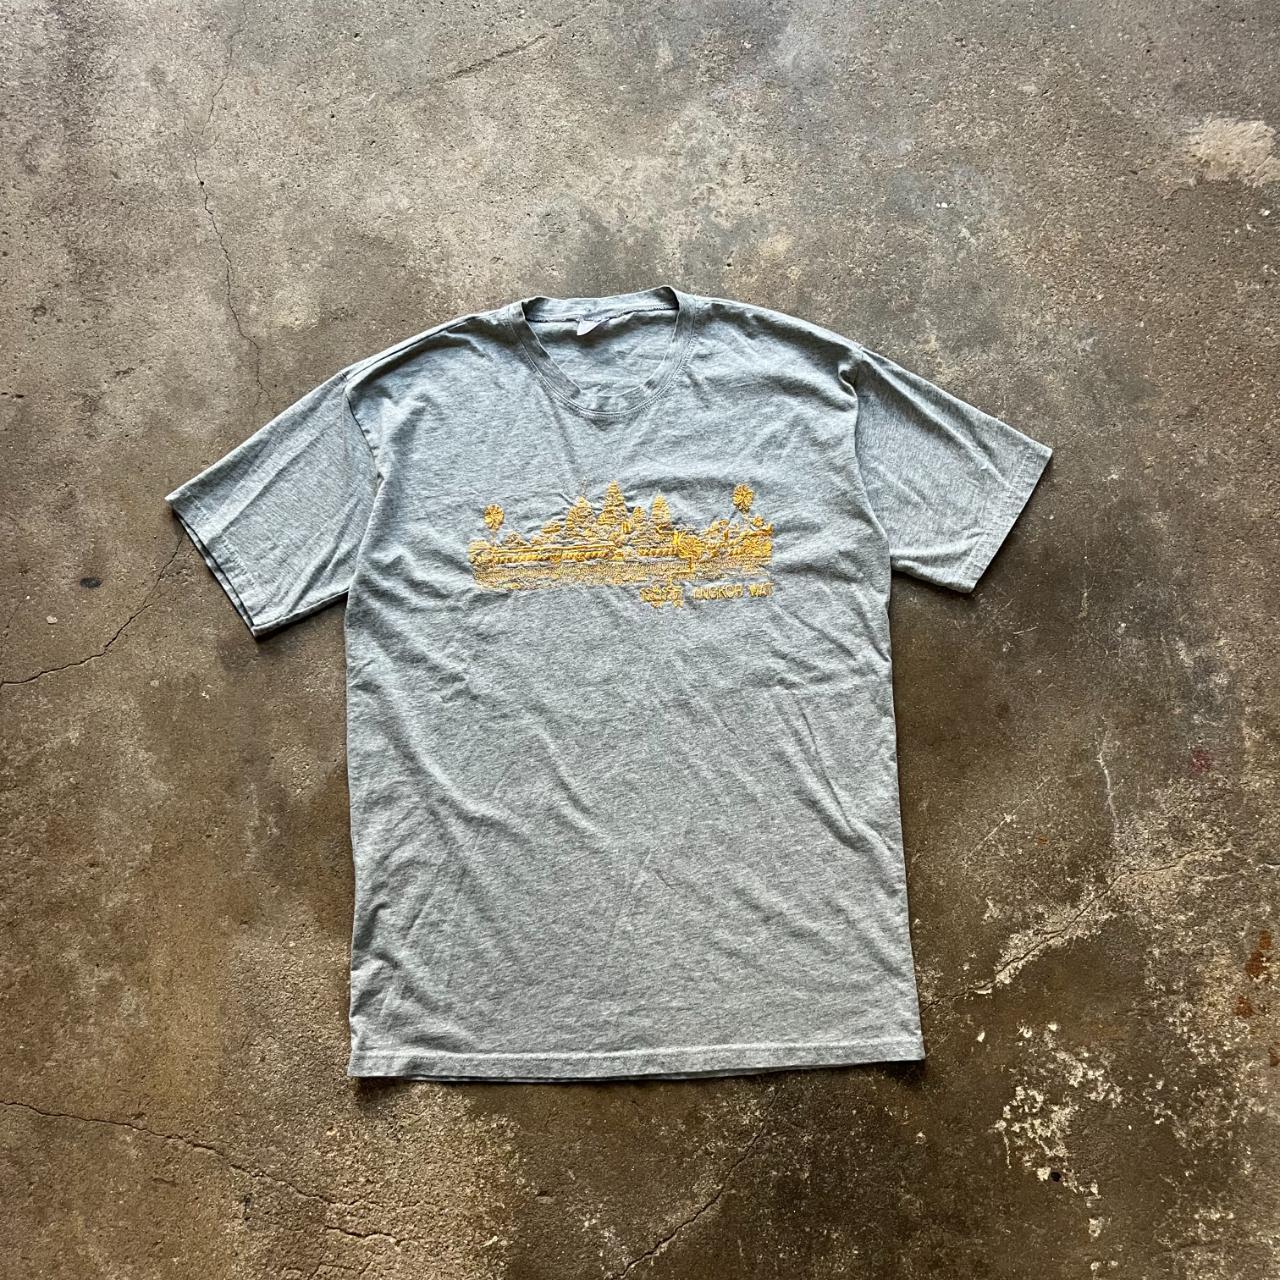 Men's Grey T-shirt